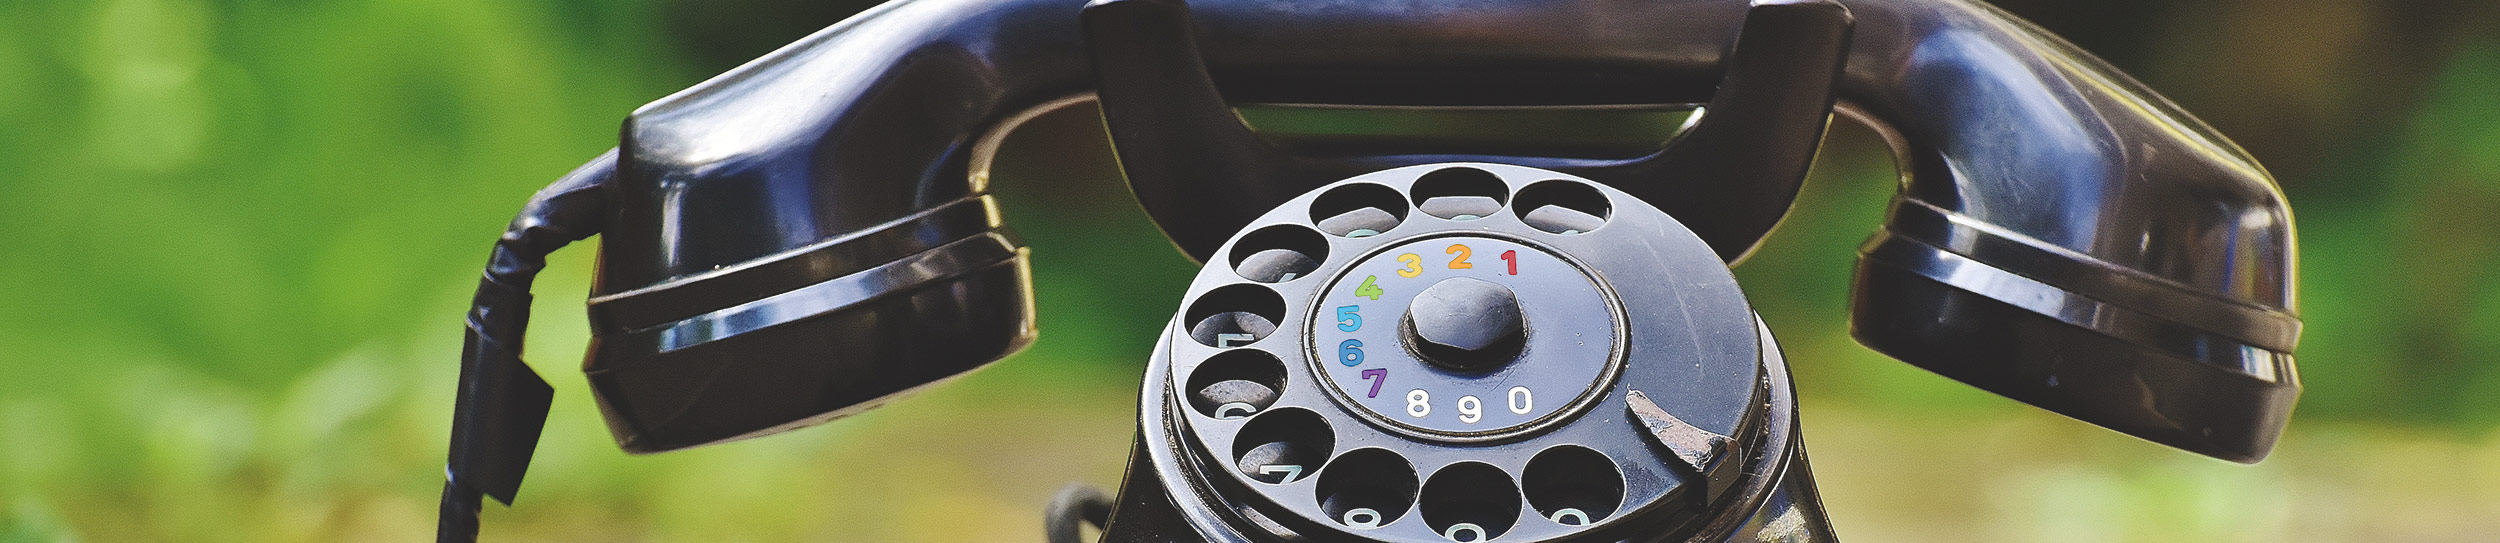 Rotary phone dial